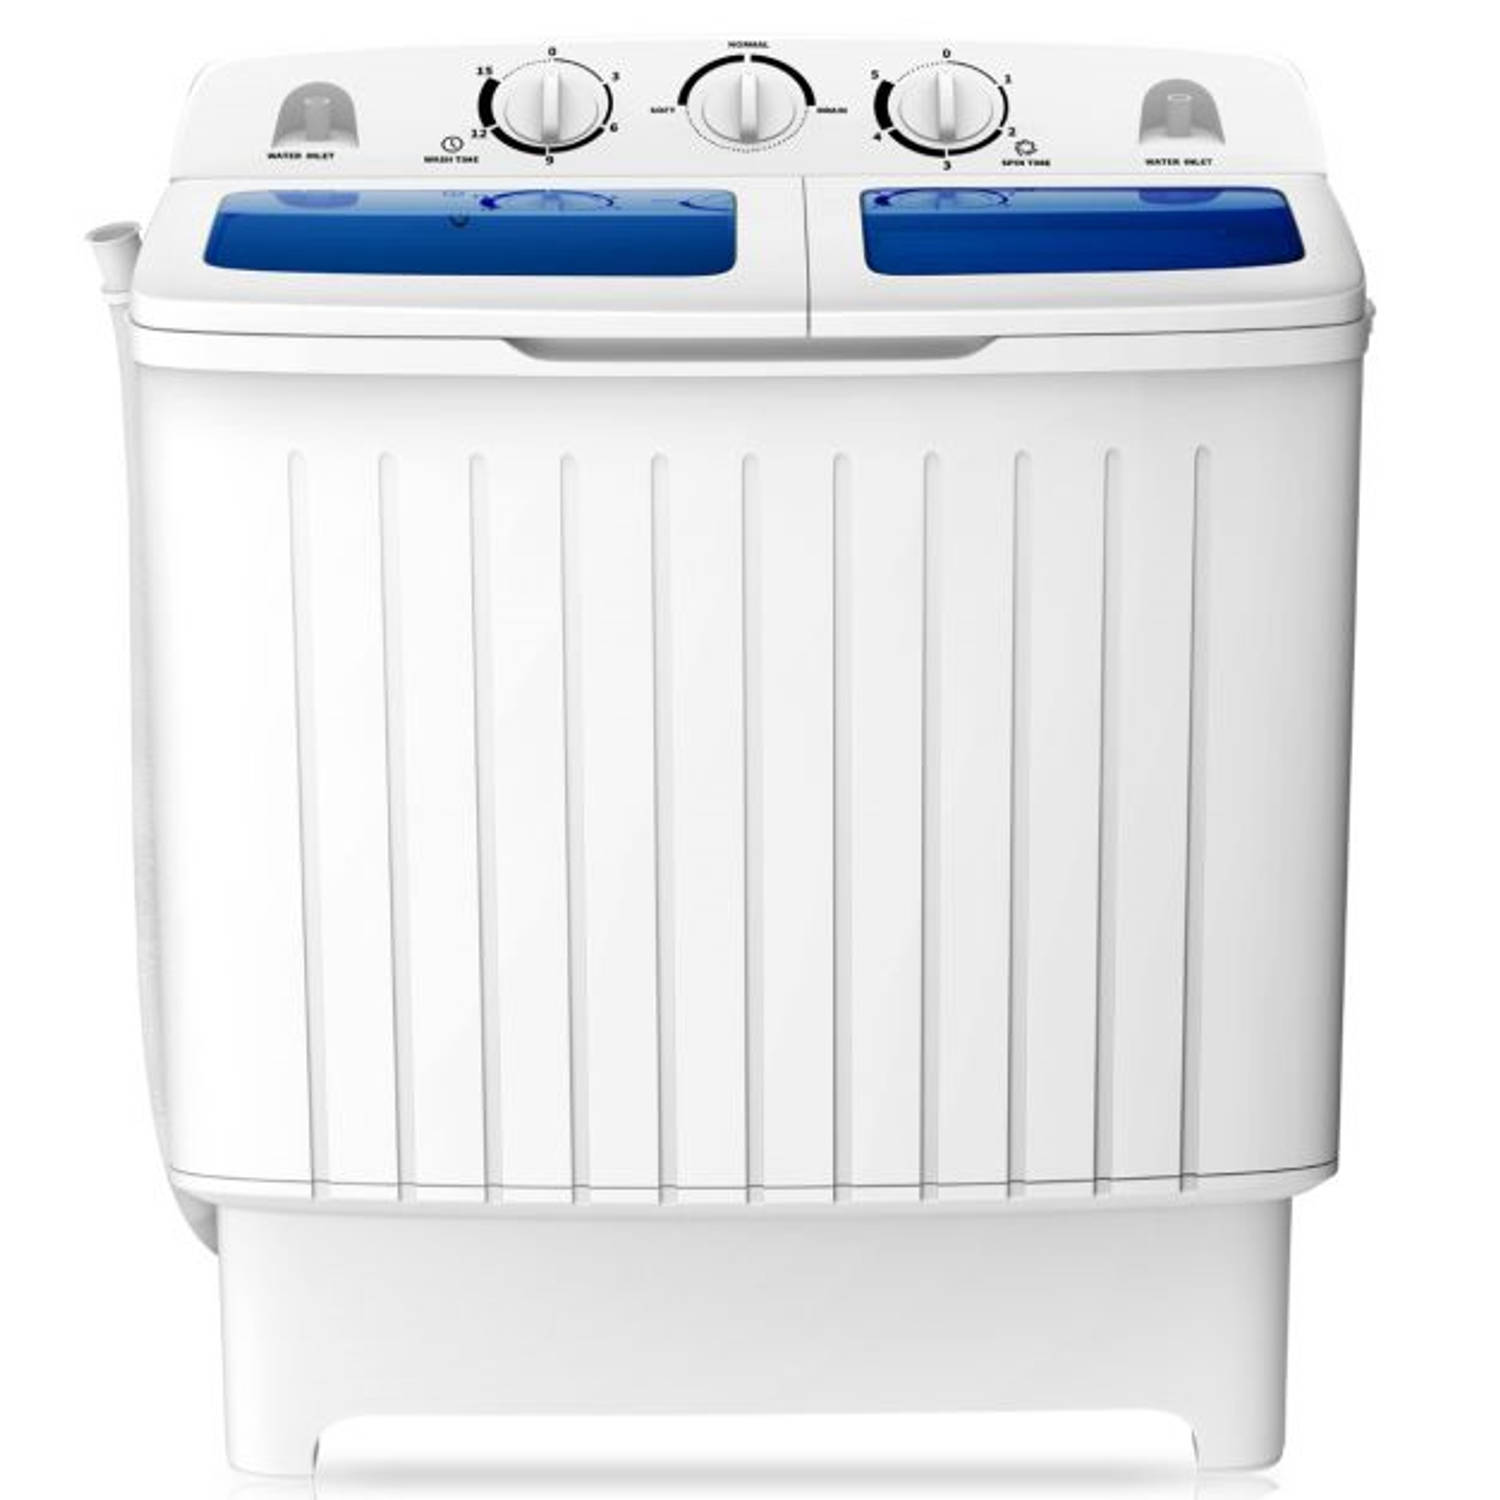 Costway camping wasmachine met dubbele trommel 5 Kg was-3 Kg centrifuge laadvermogen wit-blauw